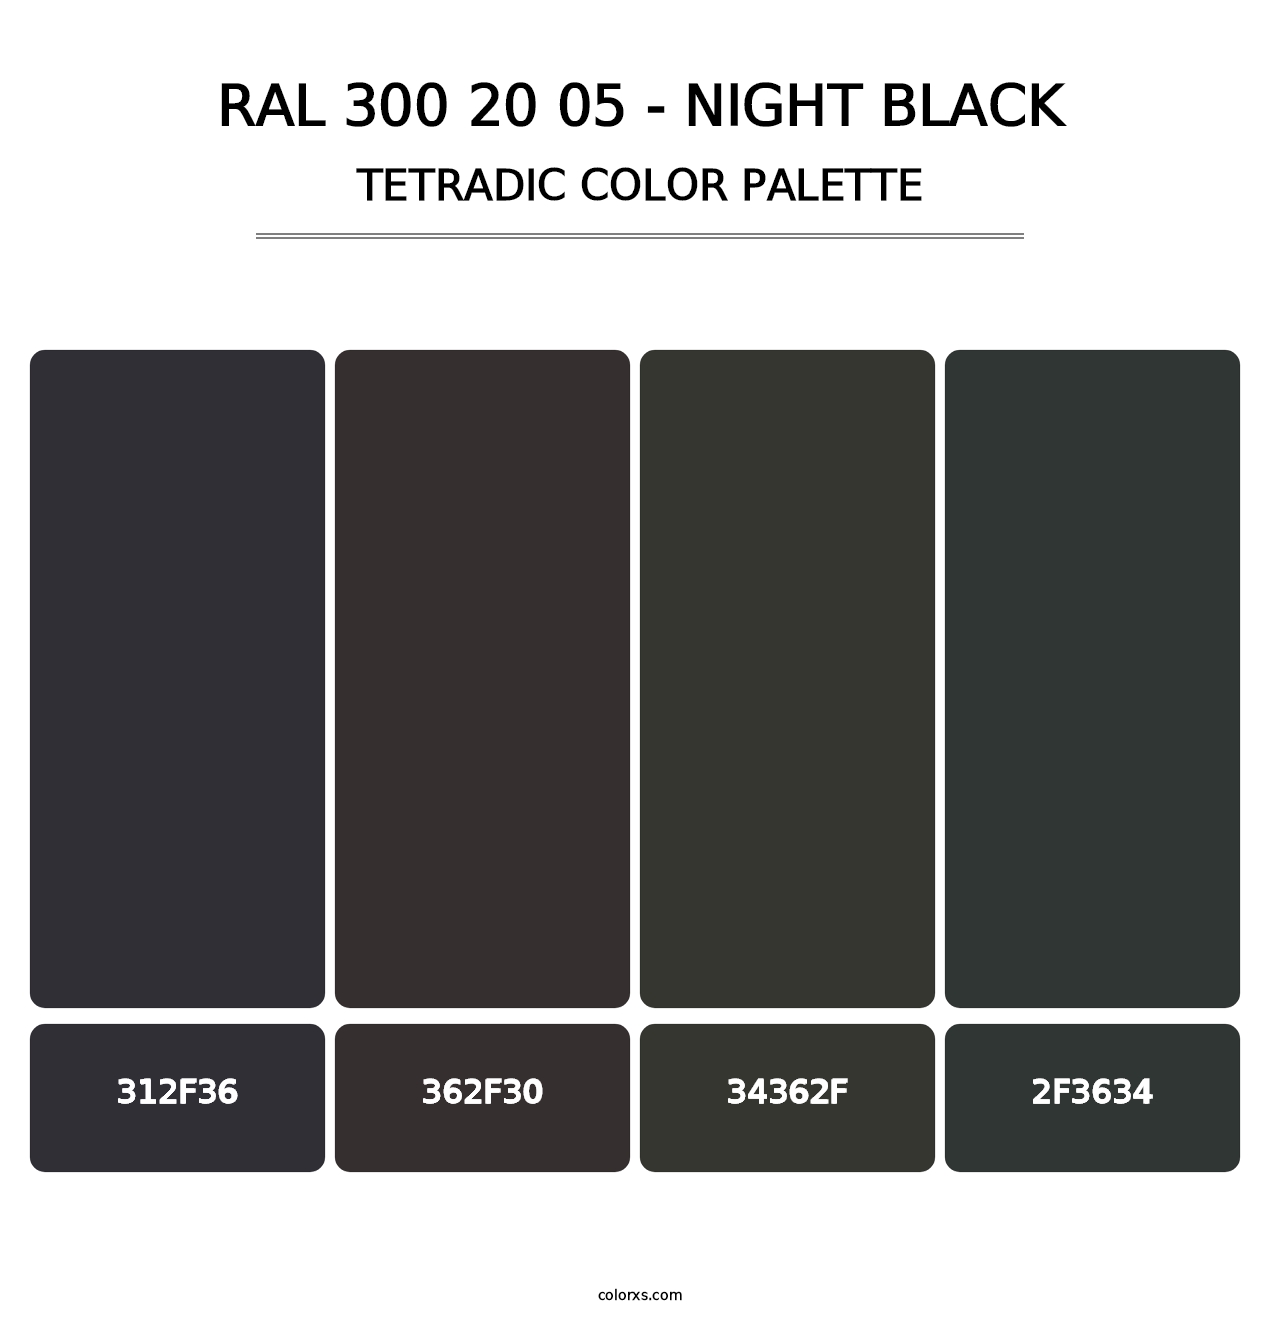 RAL 300 20 05 - Night Black - Tetradic Color Palette